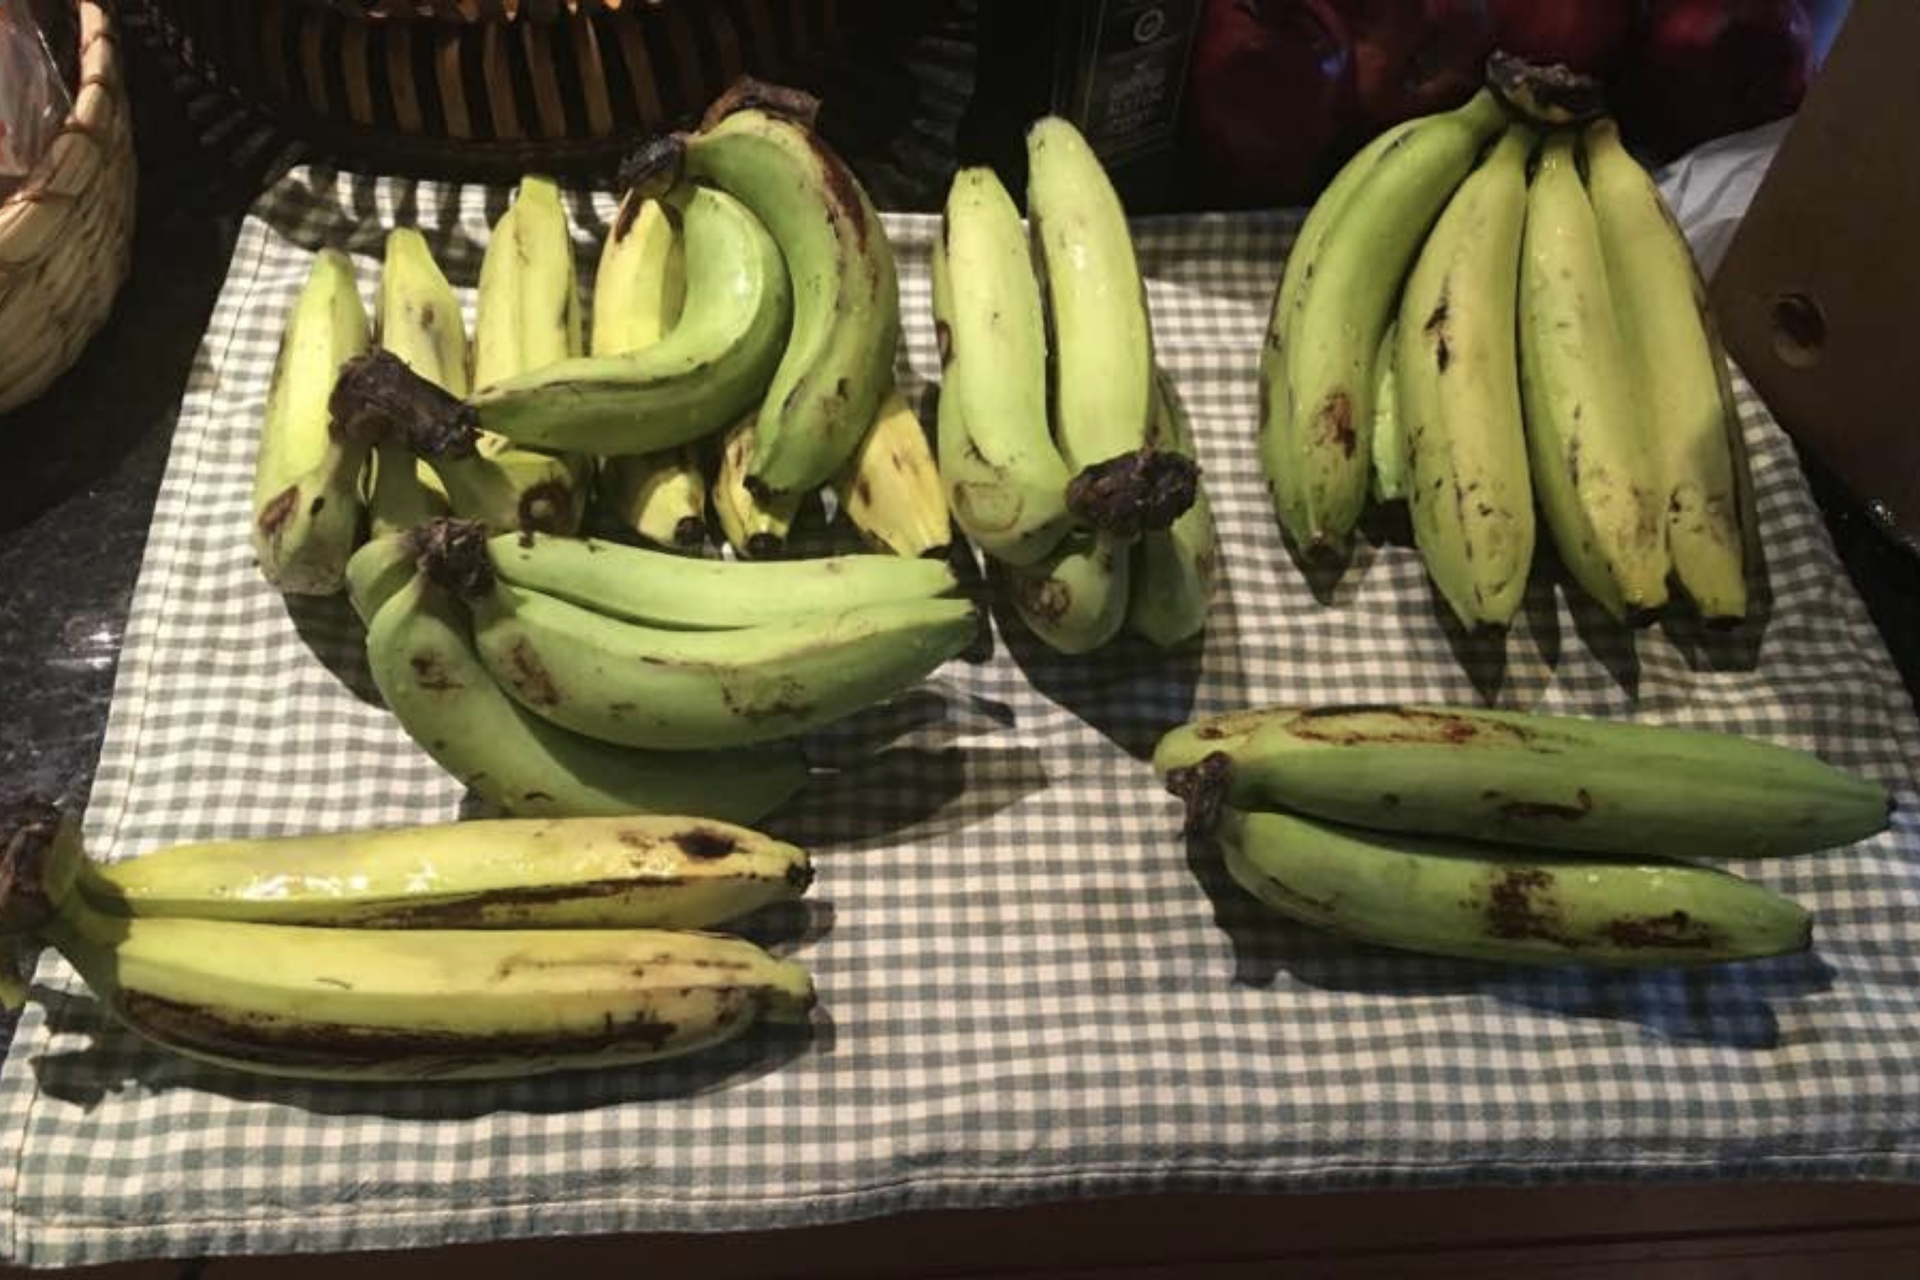 The Gros Michel banana 